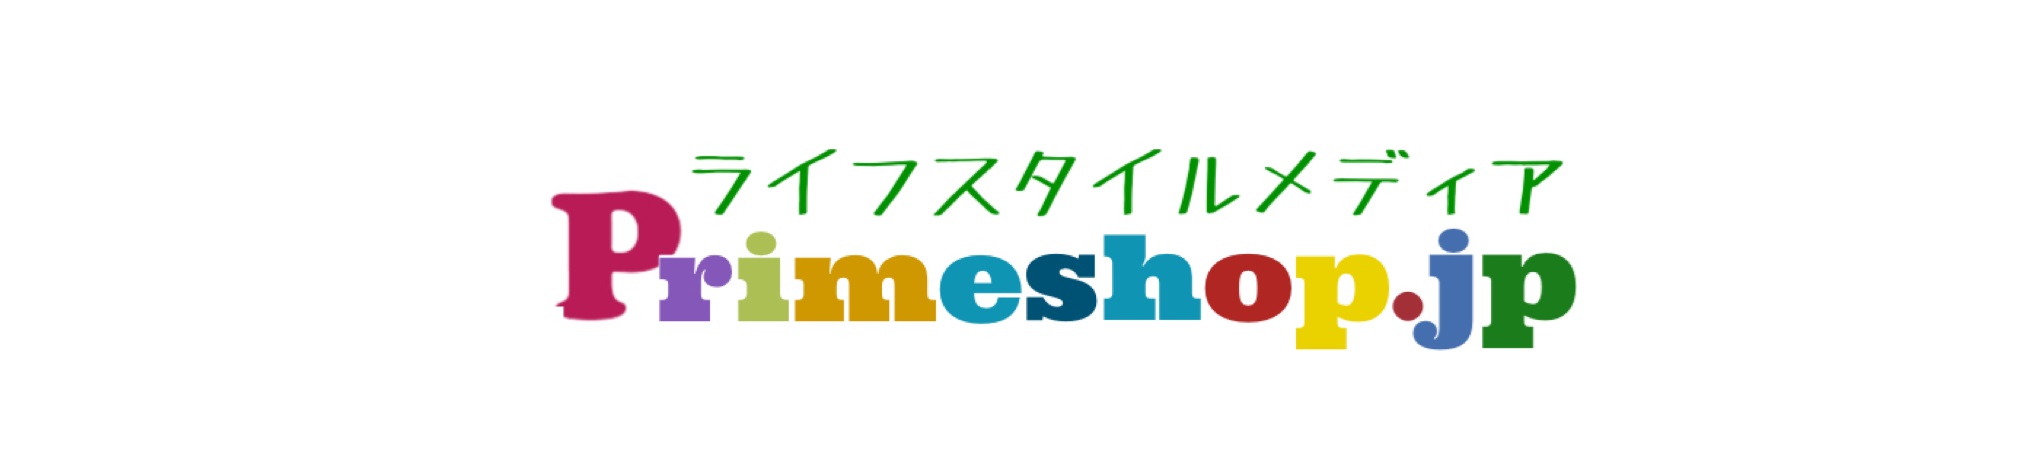 Primeshop-jp 橫幅